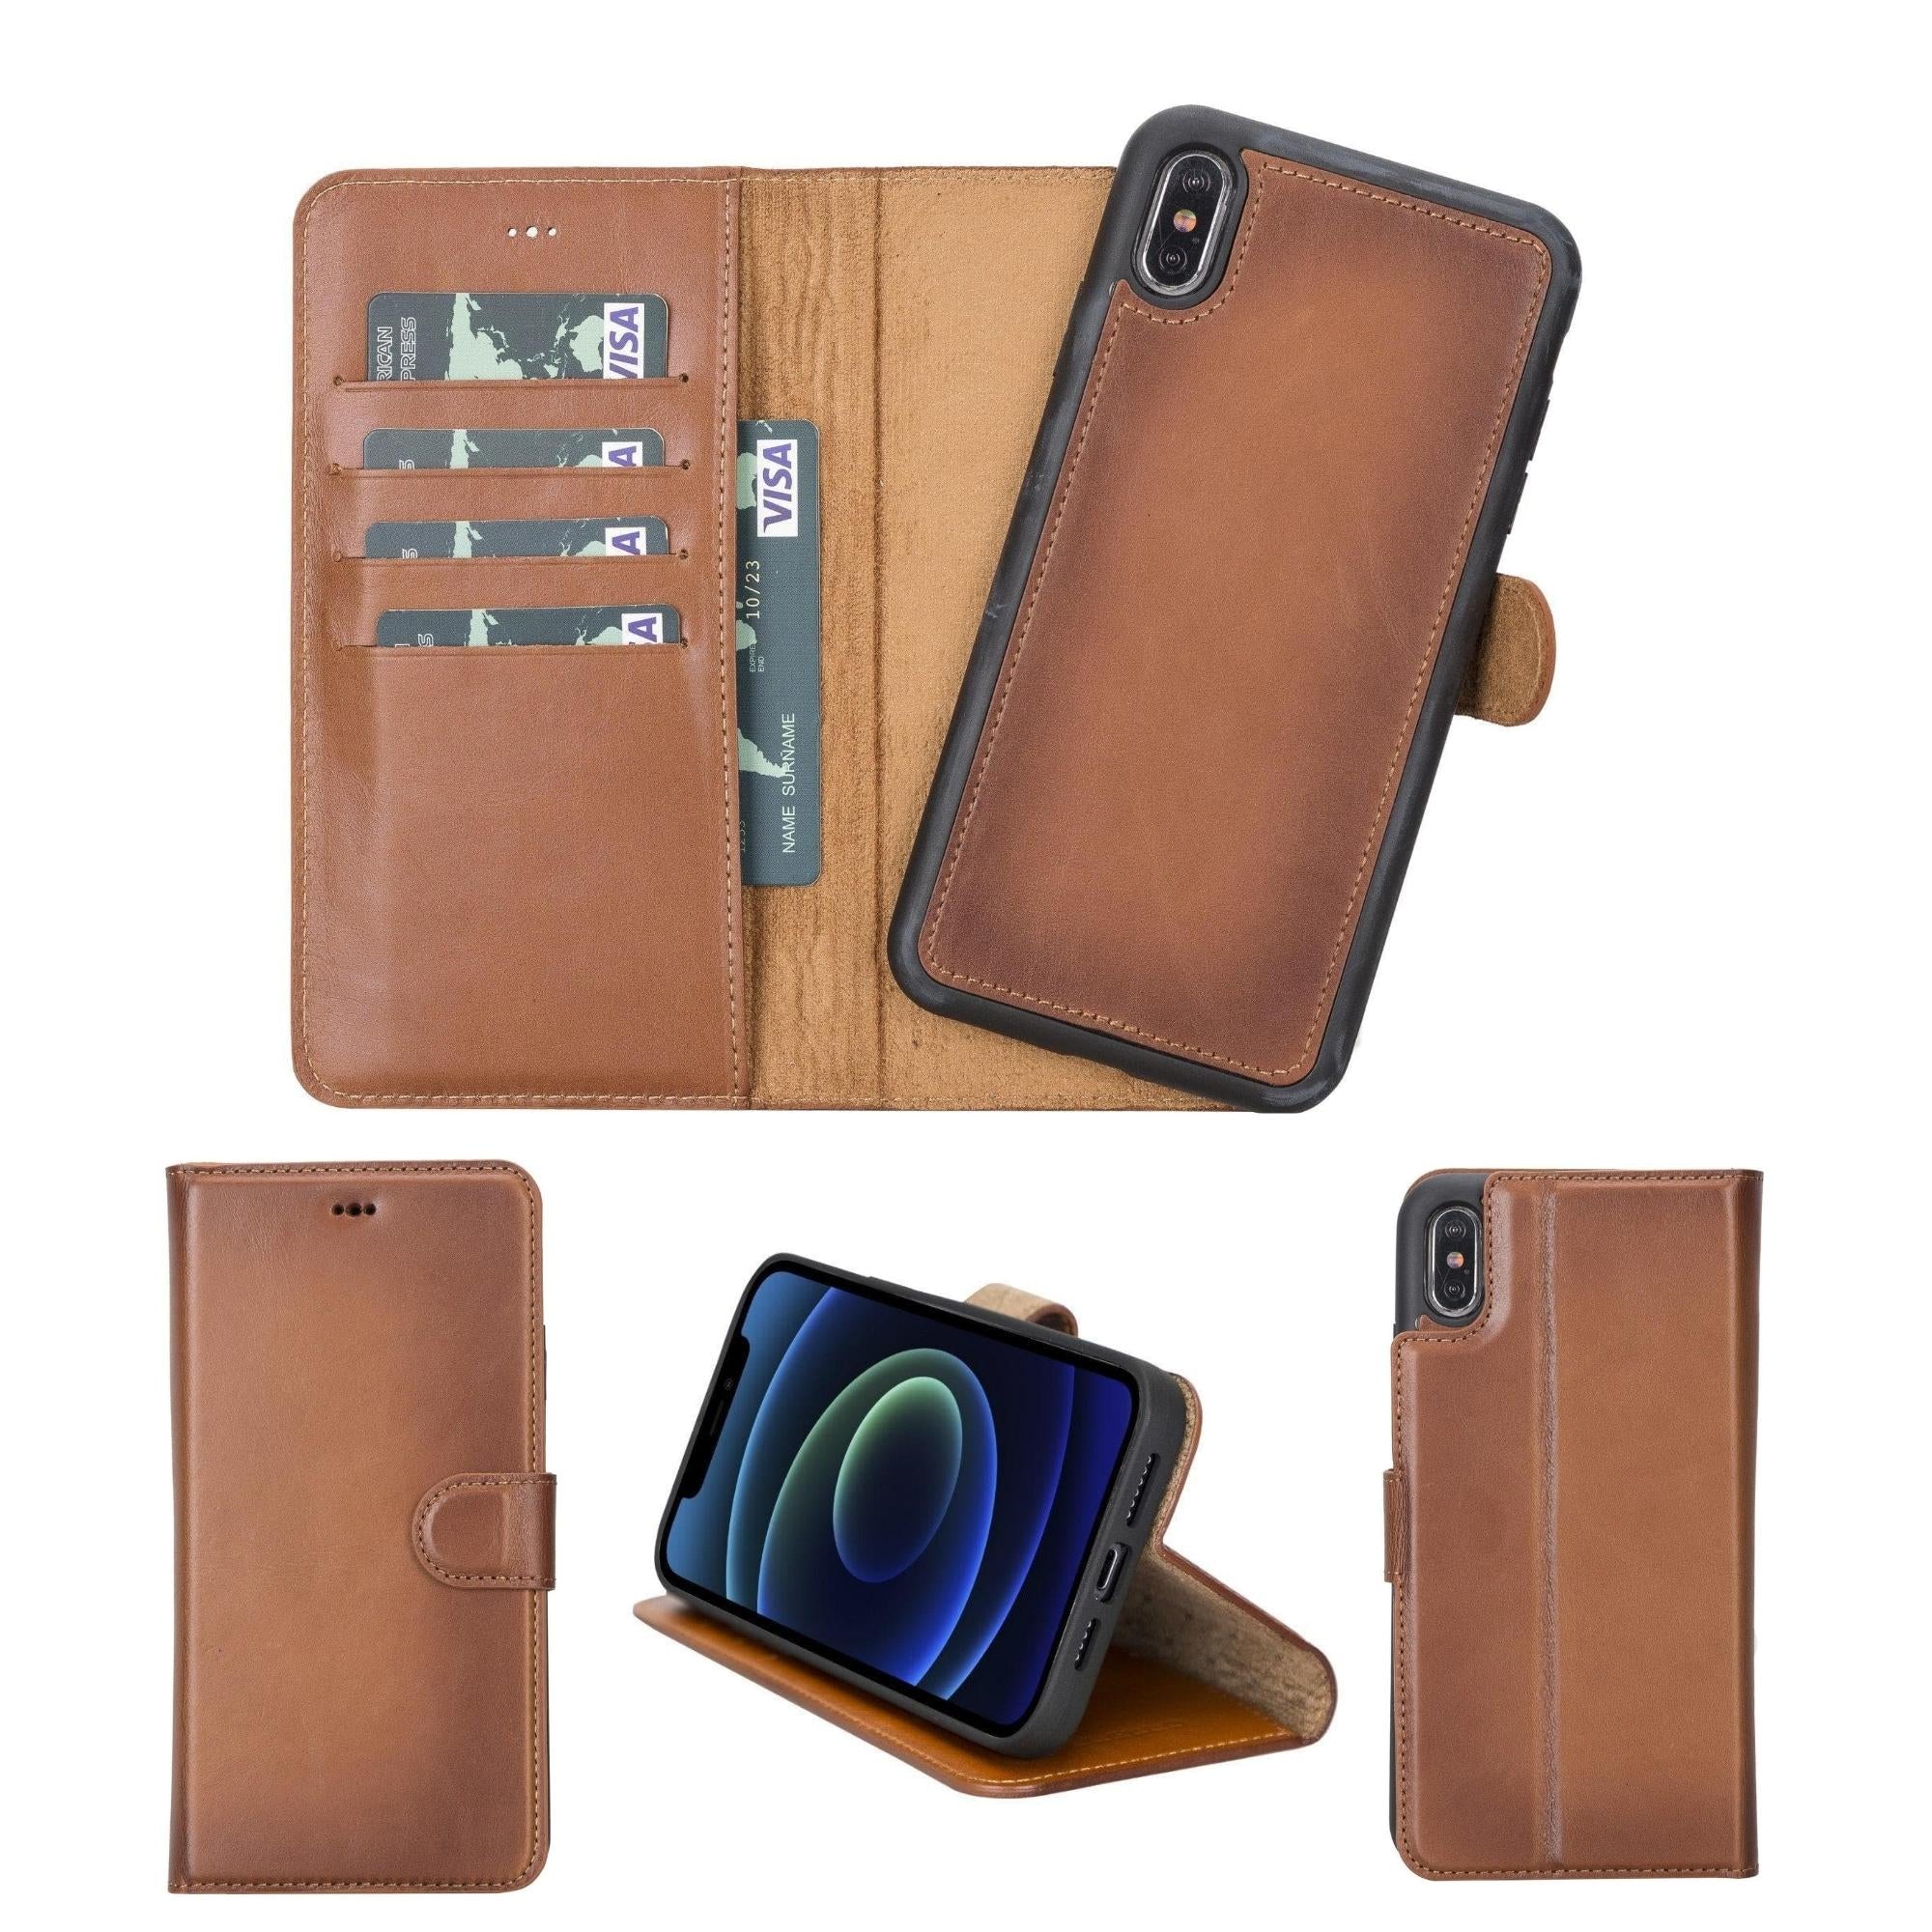 Casper iPhone XS Max Leather Wallet Case